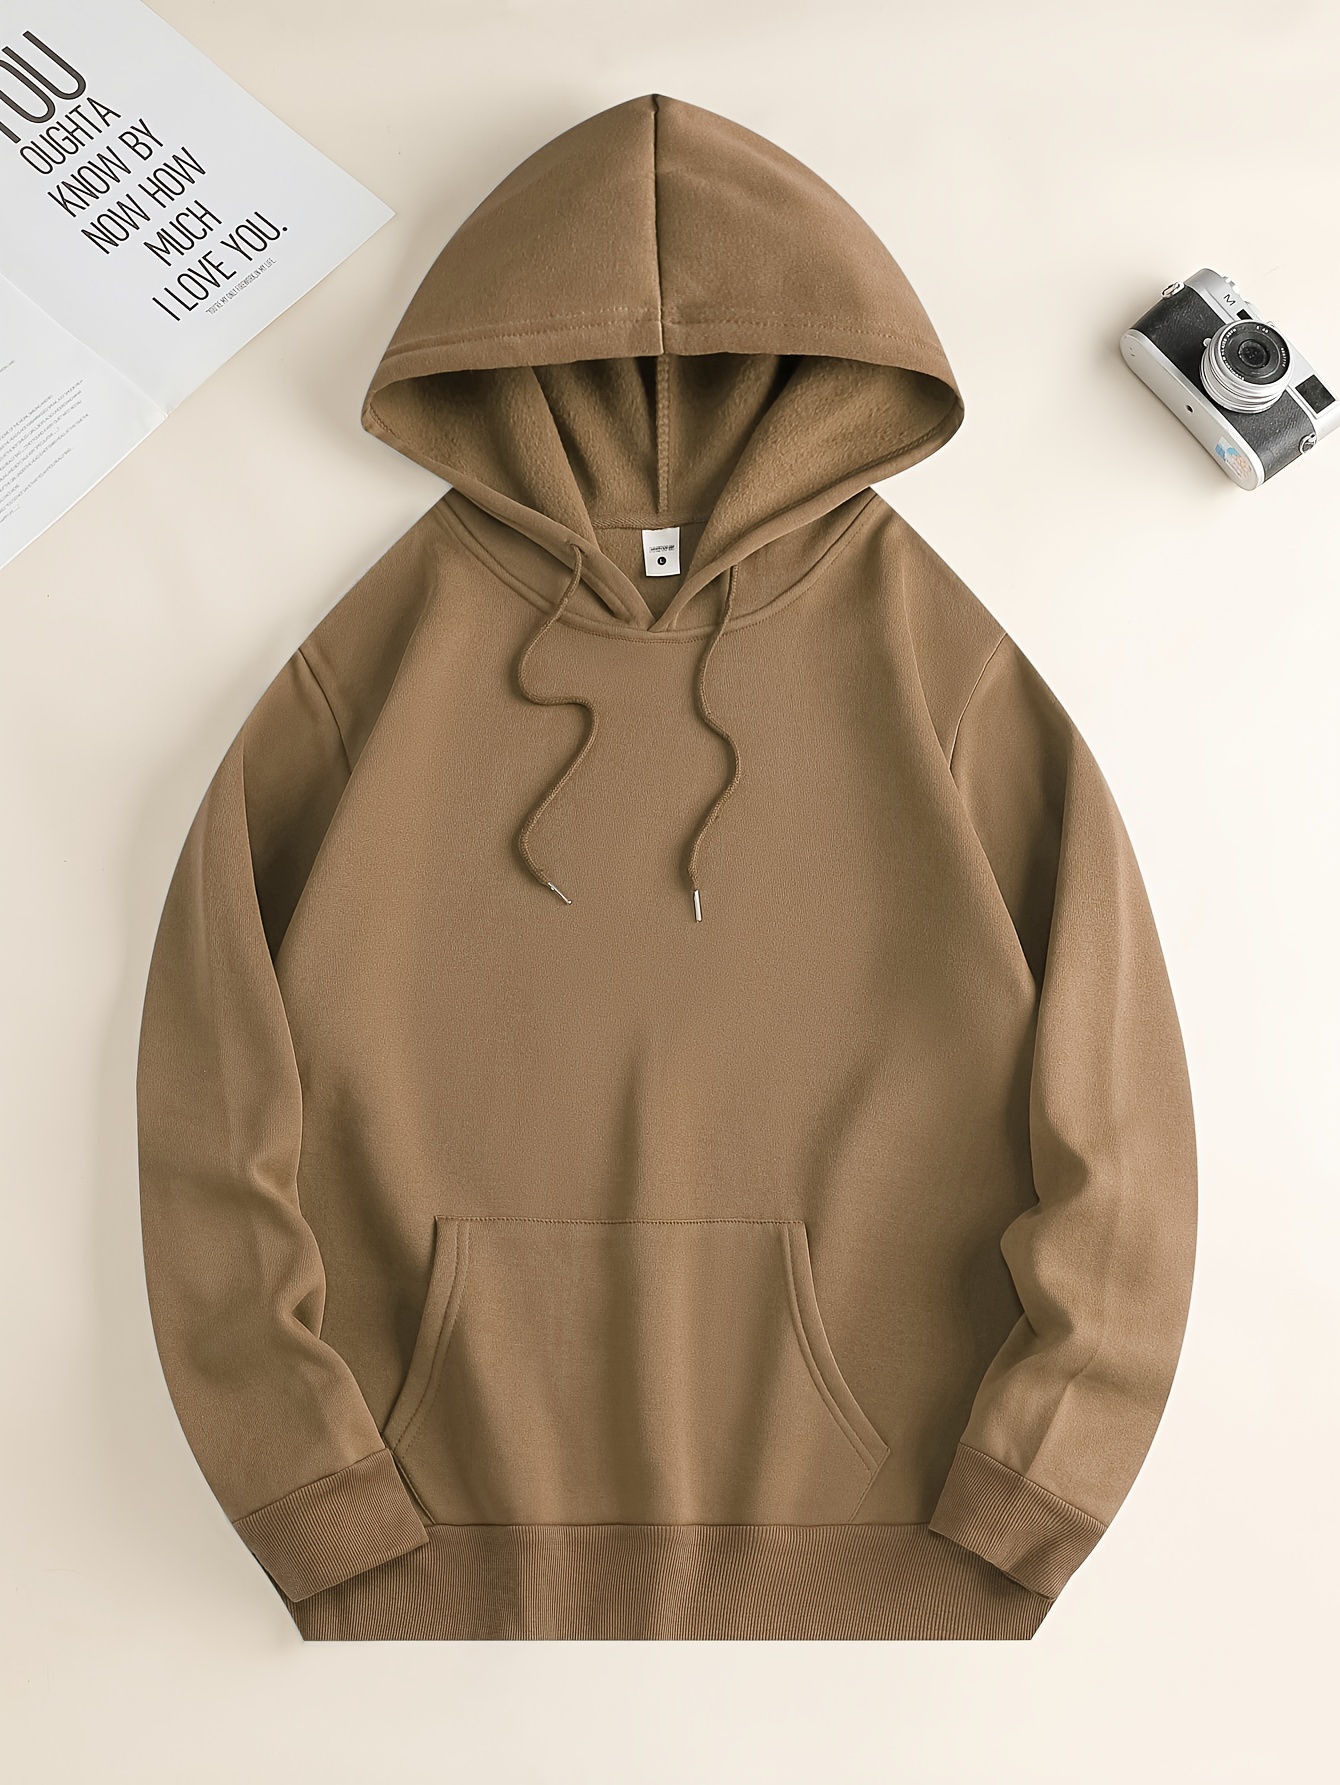 mens new trendy letters skull print hoodie casual graphic drawstring hooded sweatshirt front kangaroo pocket mens clothing details 9